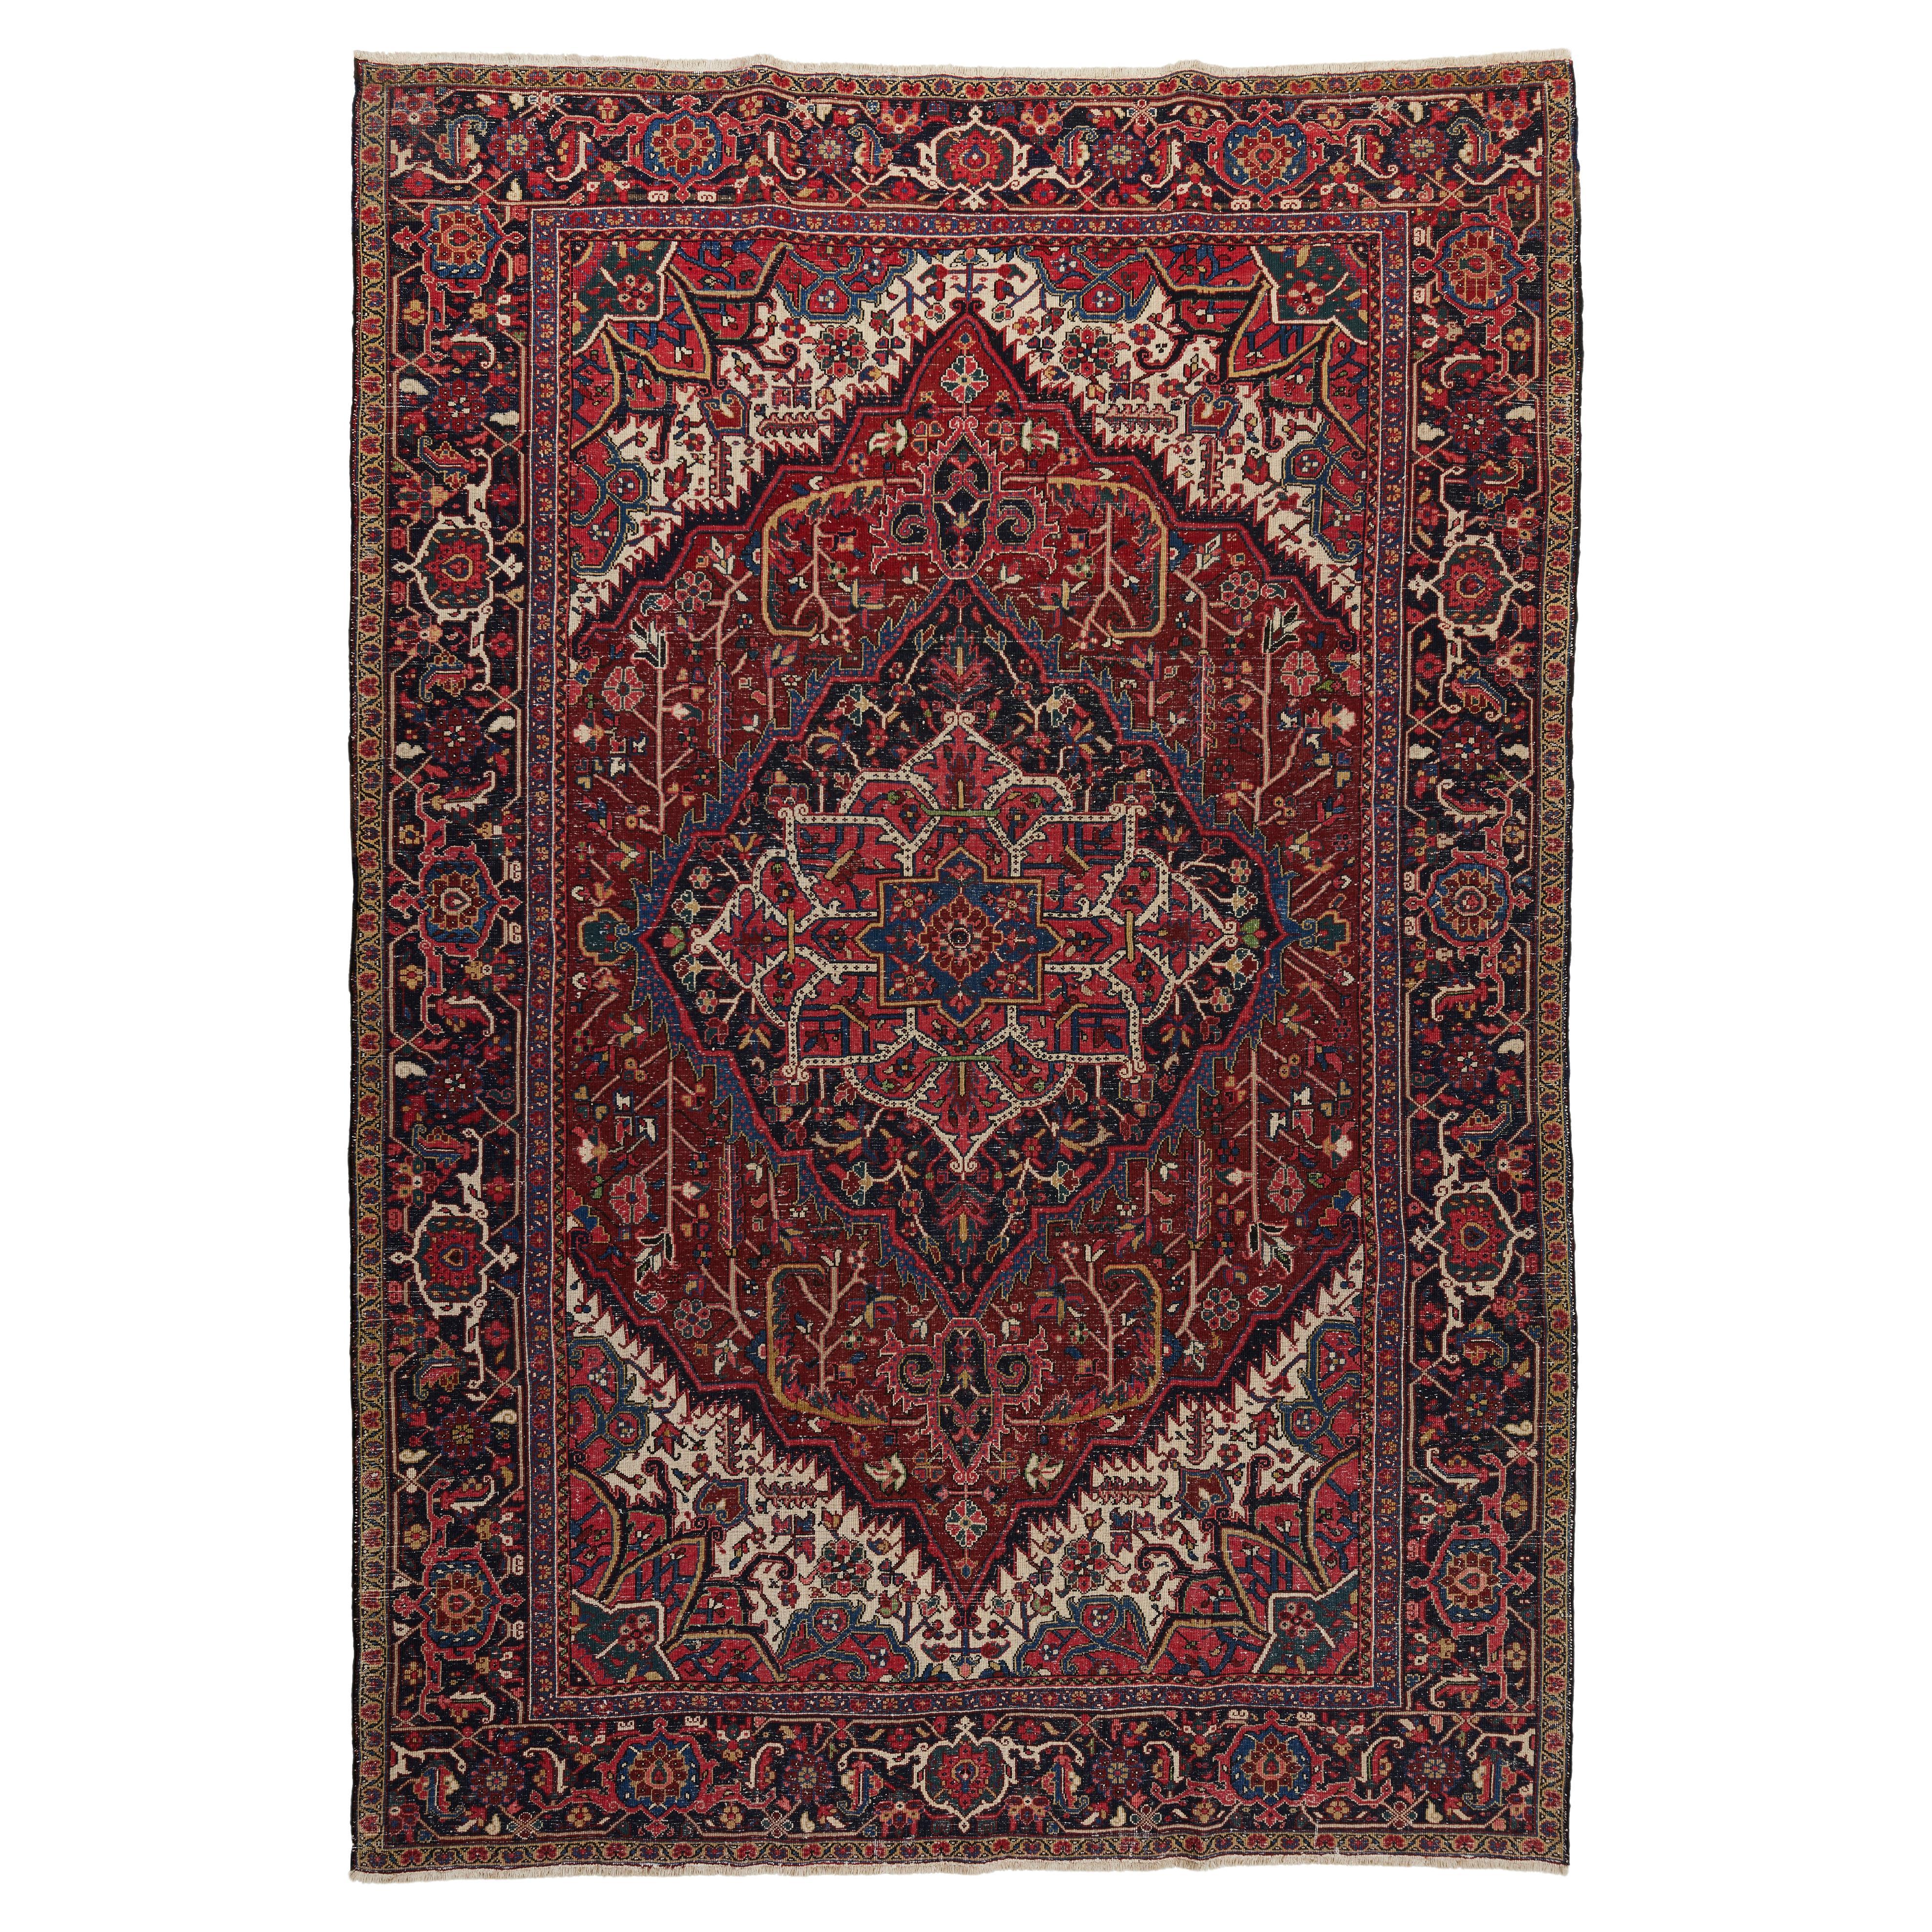 Mid 20th Century Antique Persian Heriz rug with rich reds, crimson, Burgundy